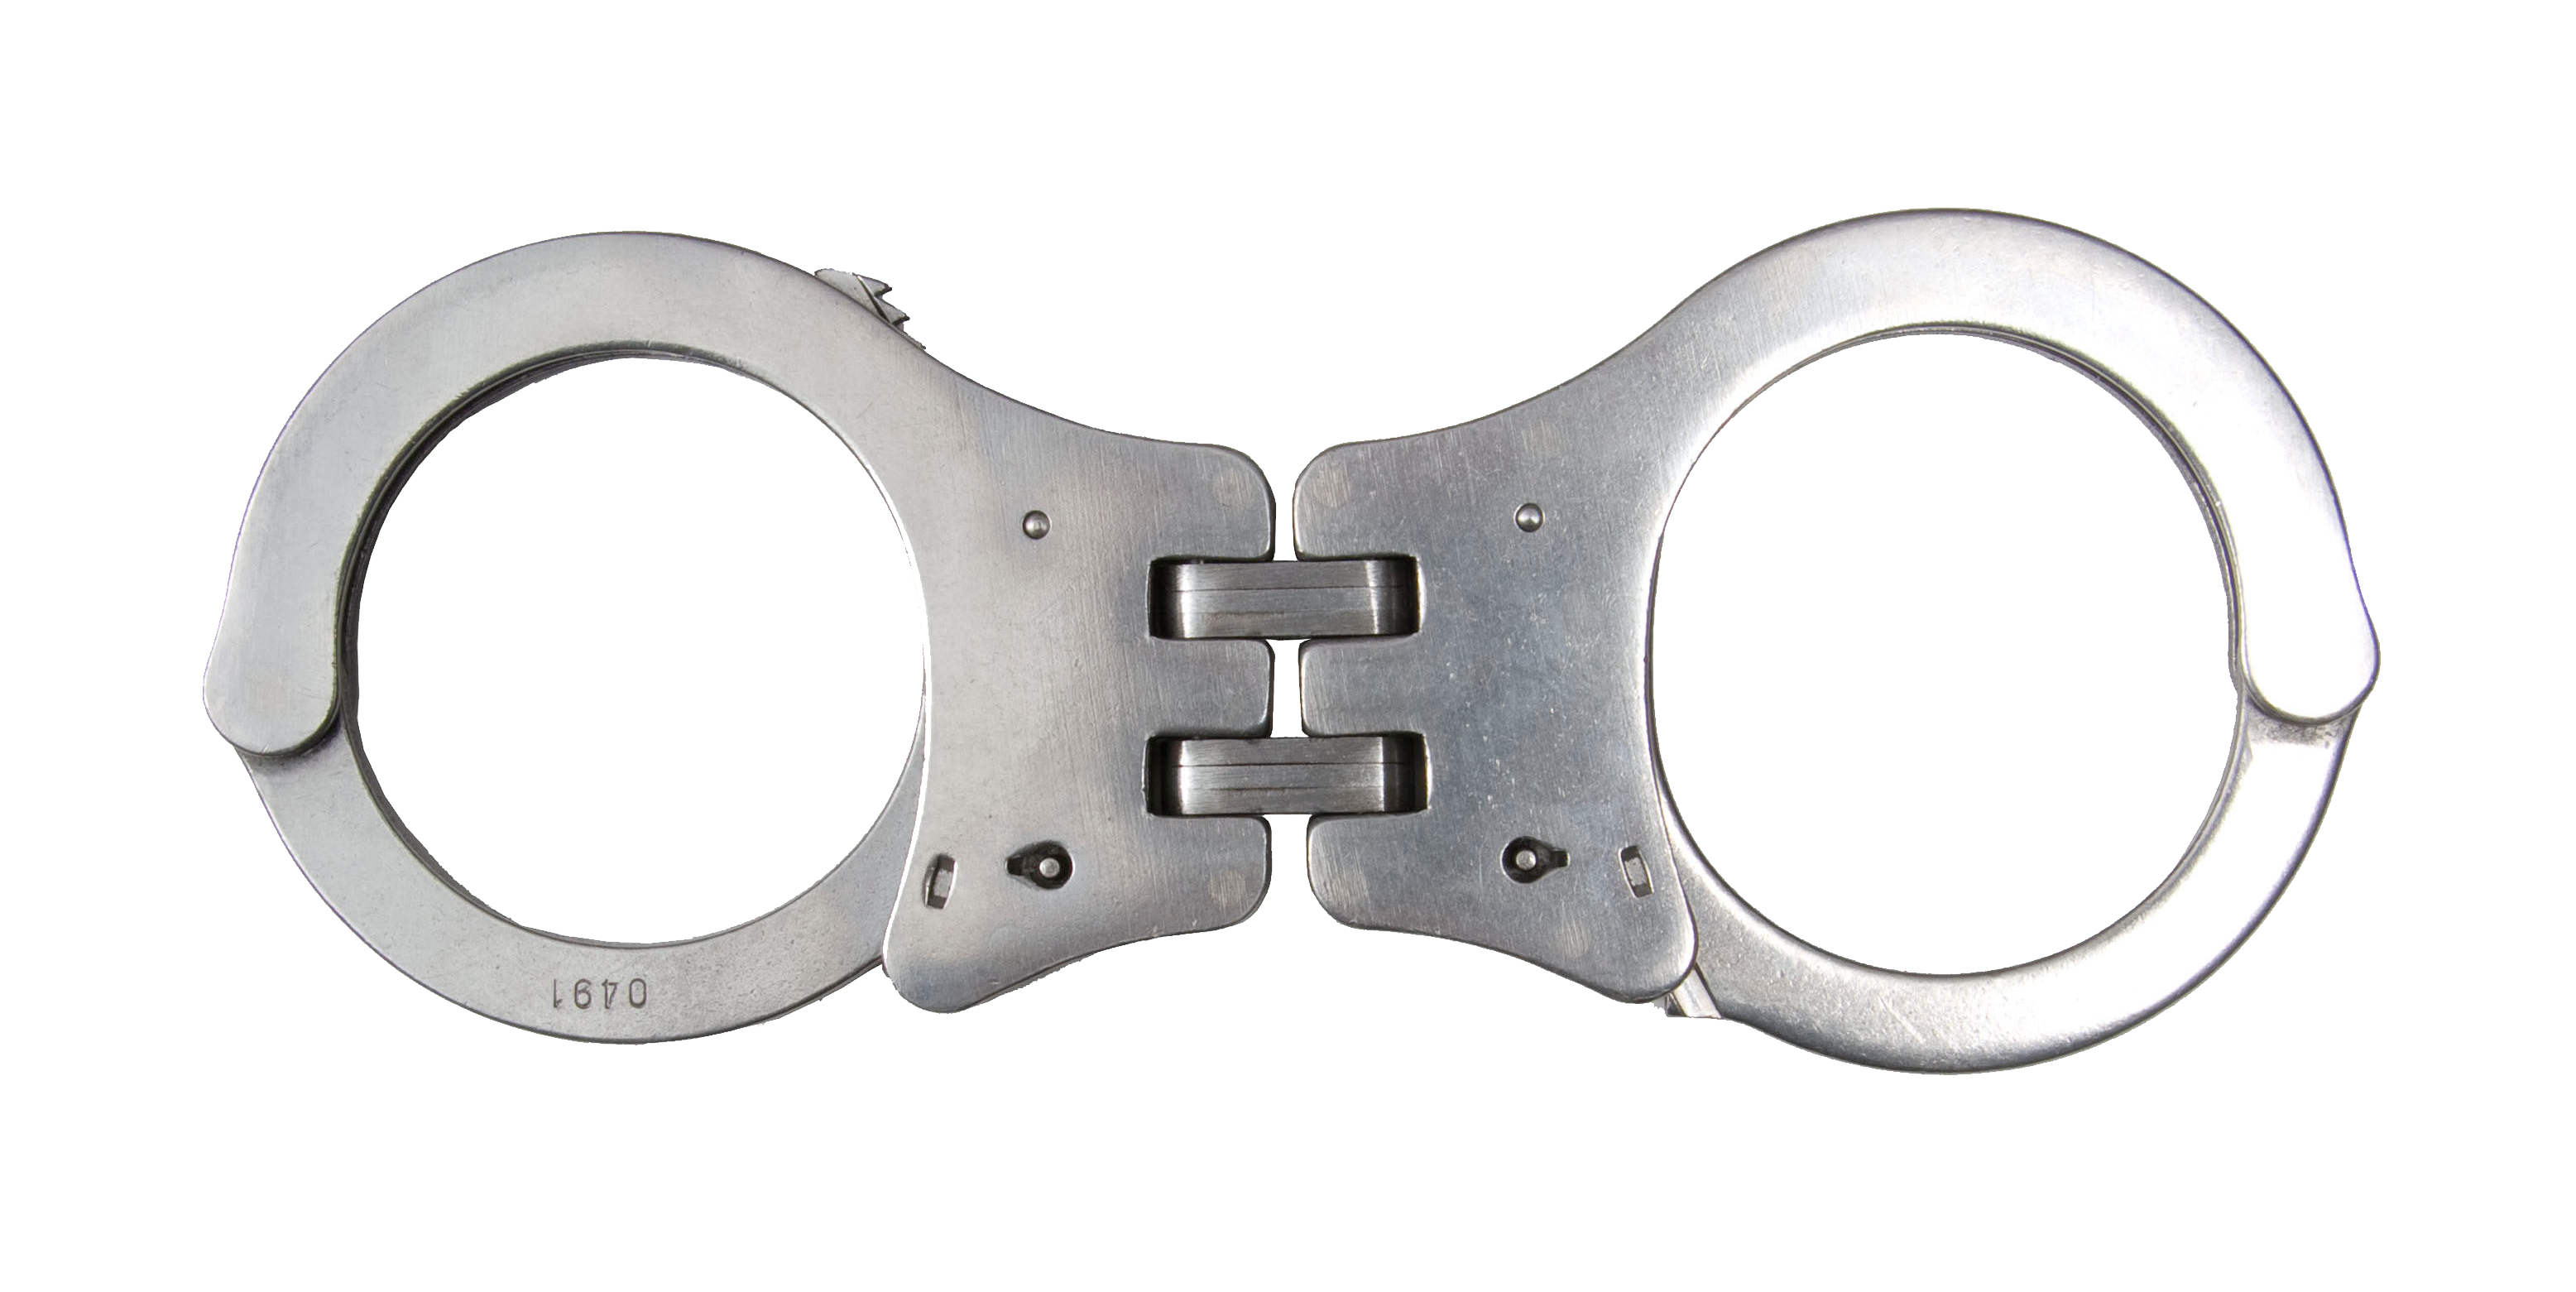 Handcuff clipart handcuff key. Arrestment handcuffs png image